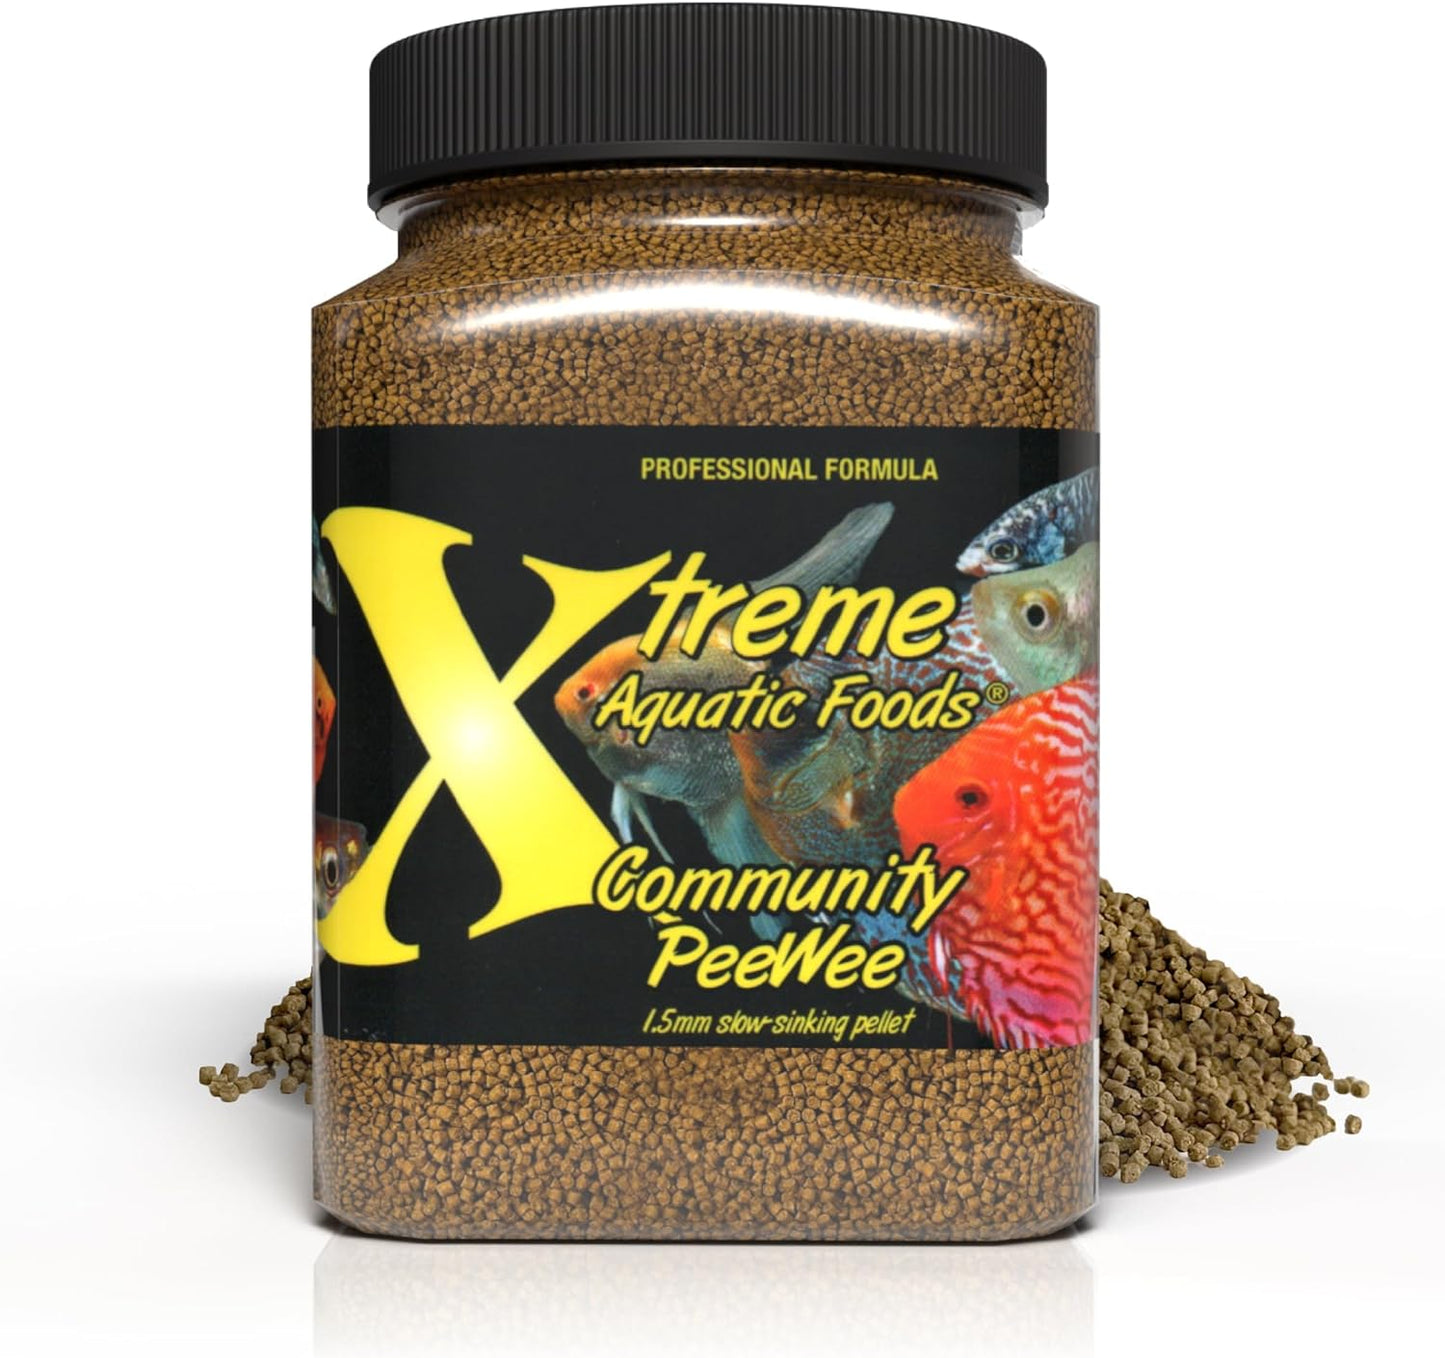 Xtreme Aquatic Foods Community PeeWee 1.5mm Slow-Sinking Pellets 20 oz (567g) 862363000376 Super Cichlids